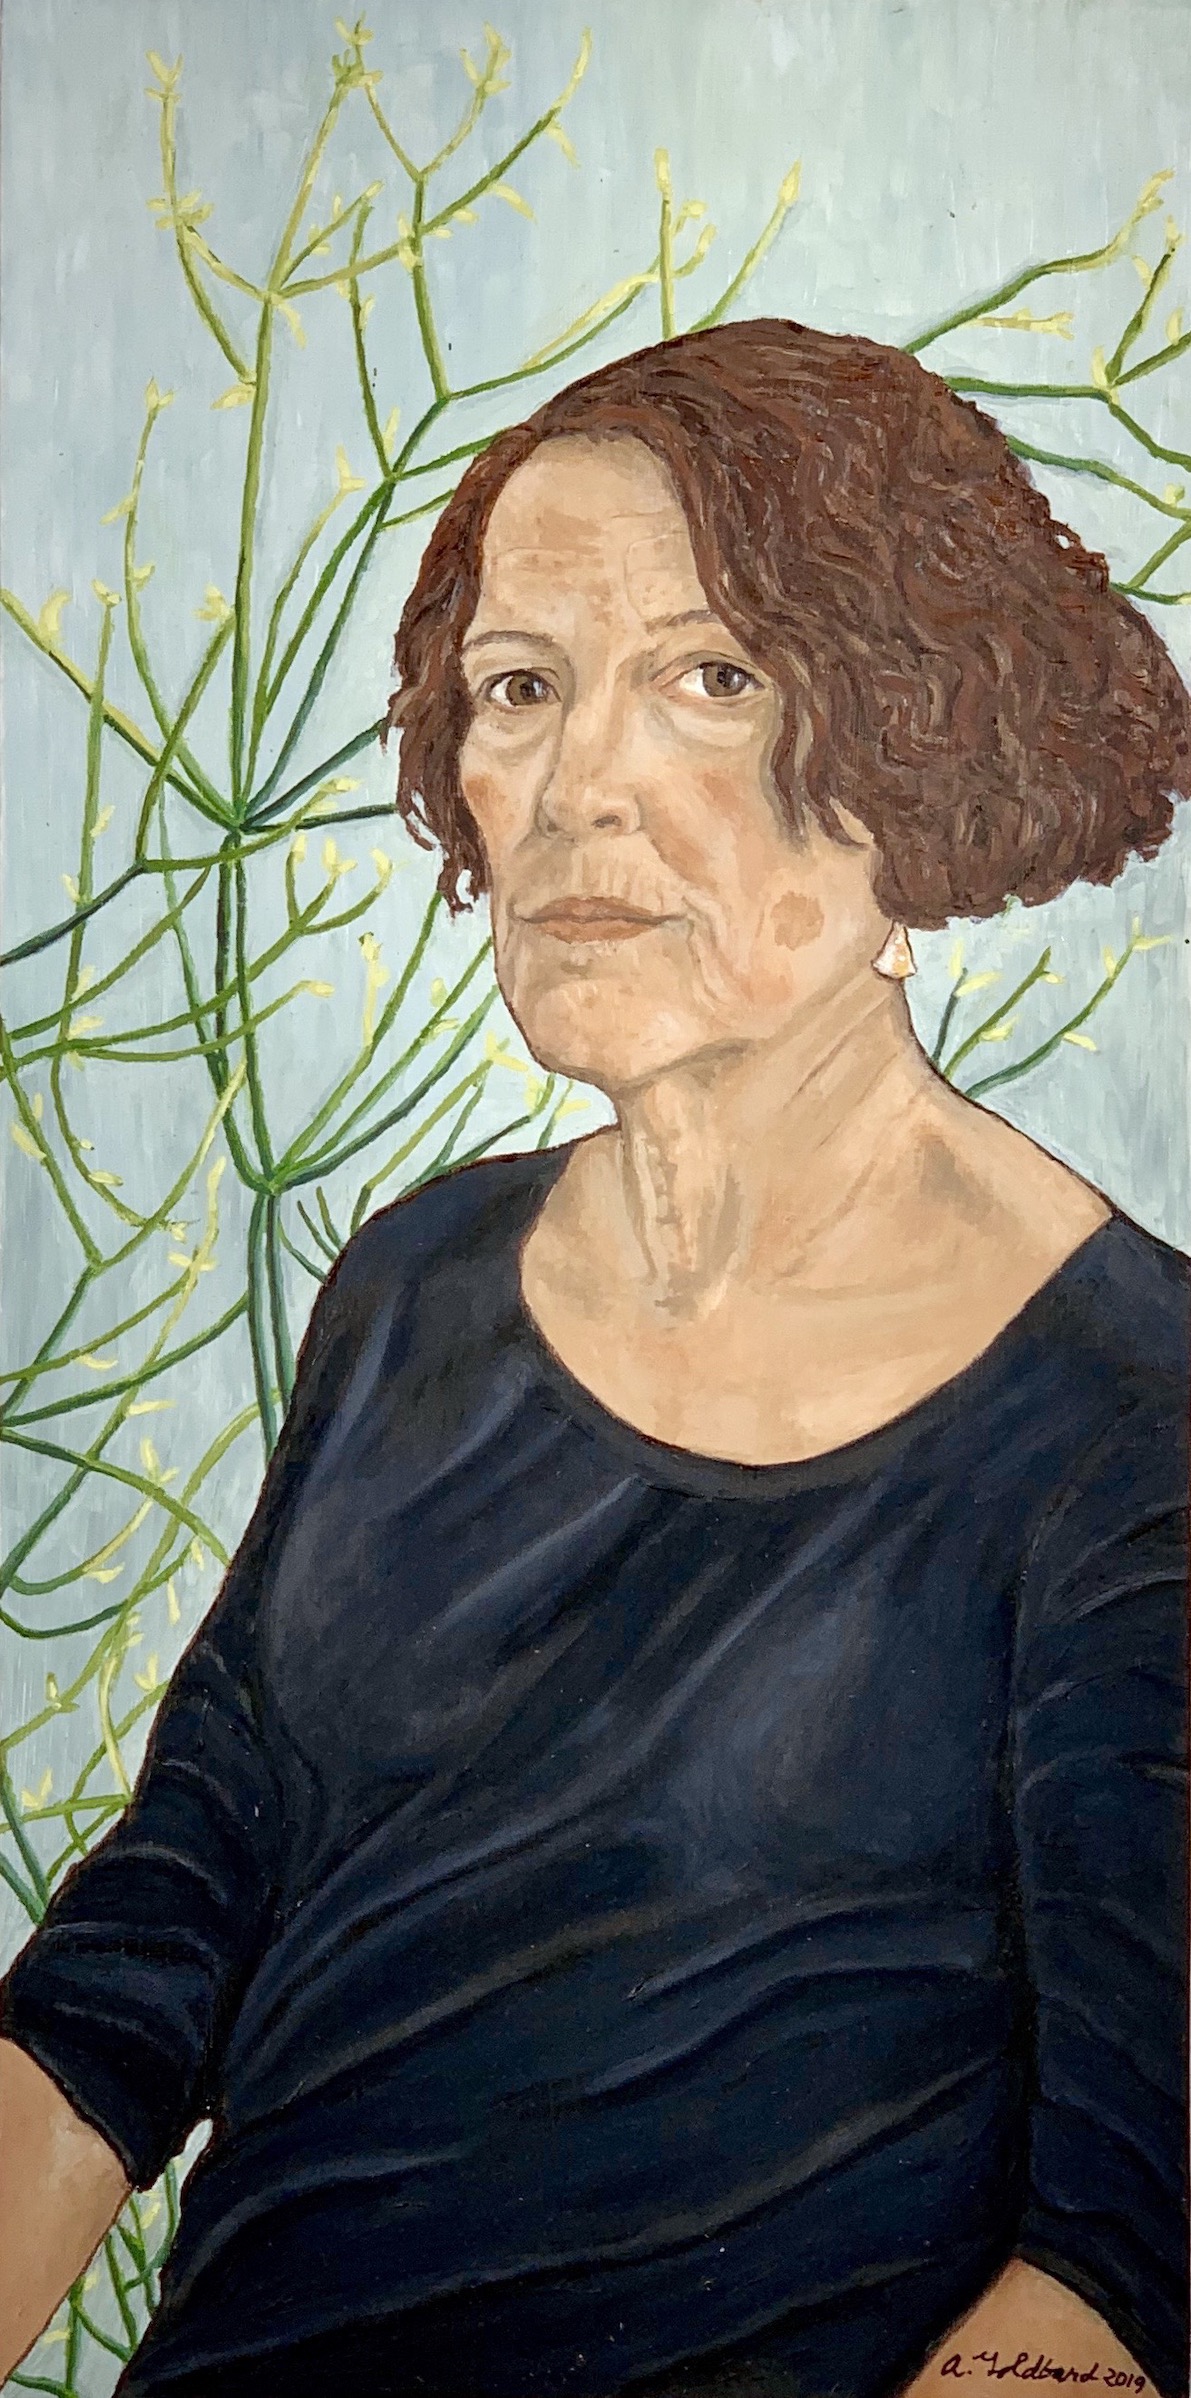 Self-portrait with euphorbia, 2019, oil on panel, 12x24